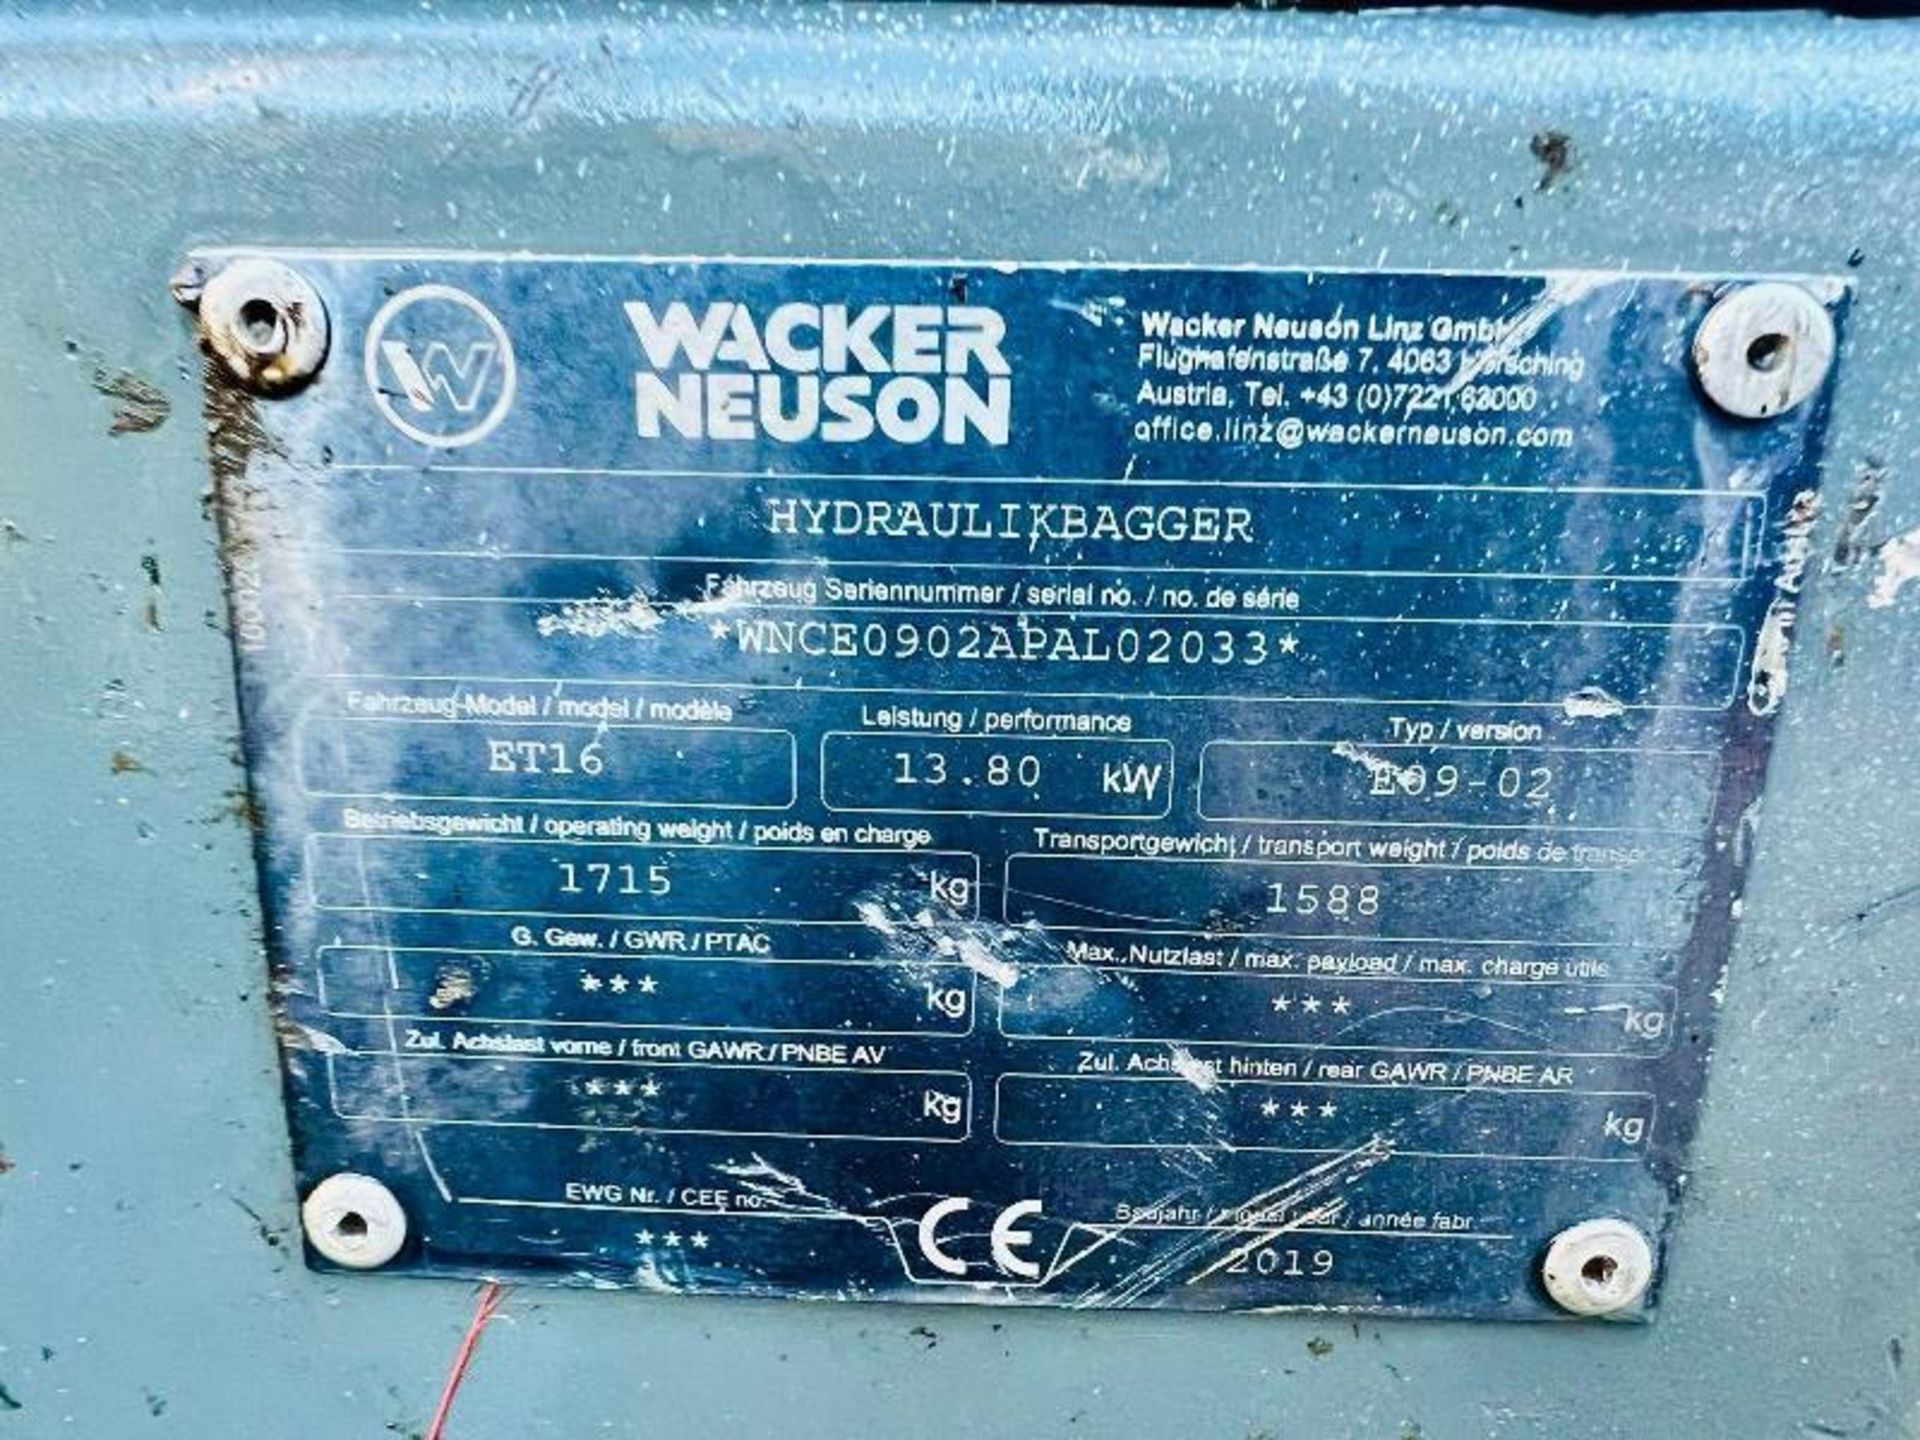 WACKER NEUSON ET16 EXCAVATOR *YEAR 2019, 2198 HOURS* C/W EXPANDING TRACKS - Bild 8 aus 16